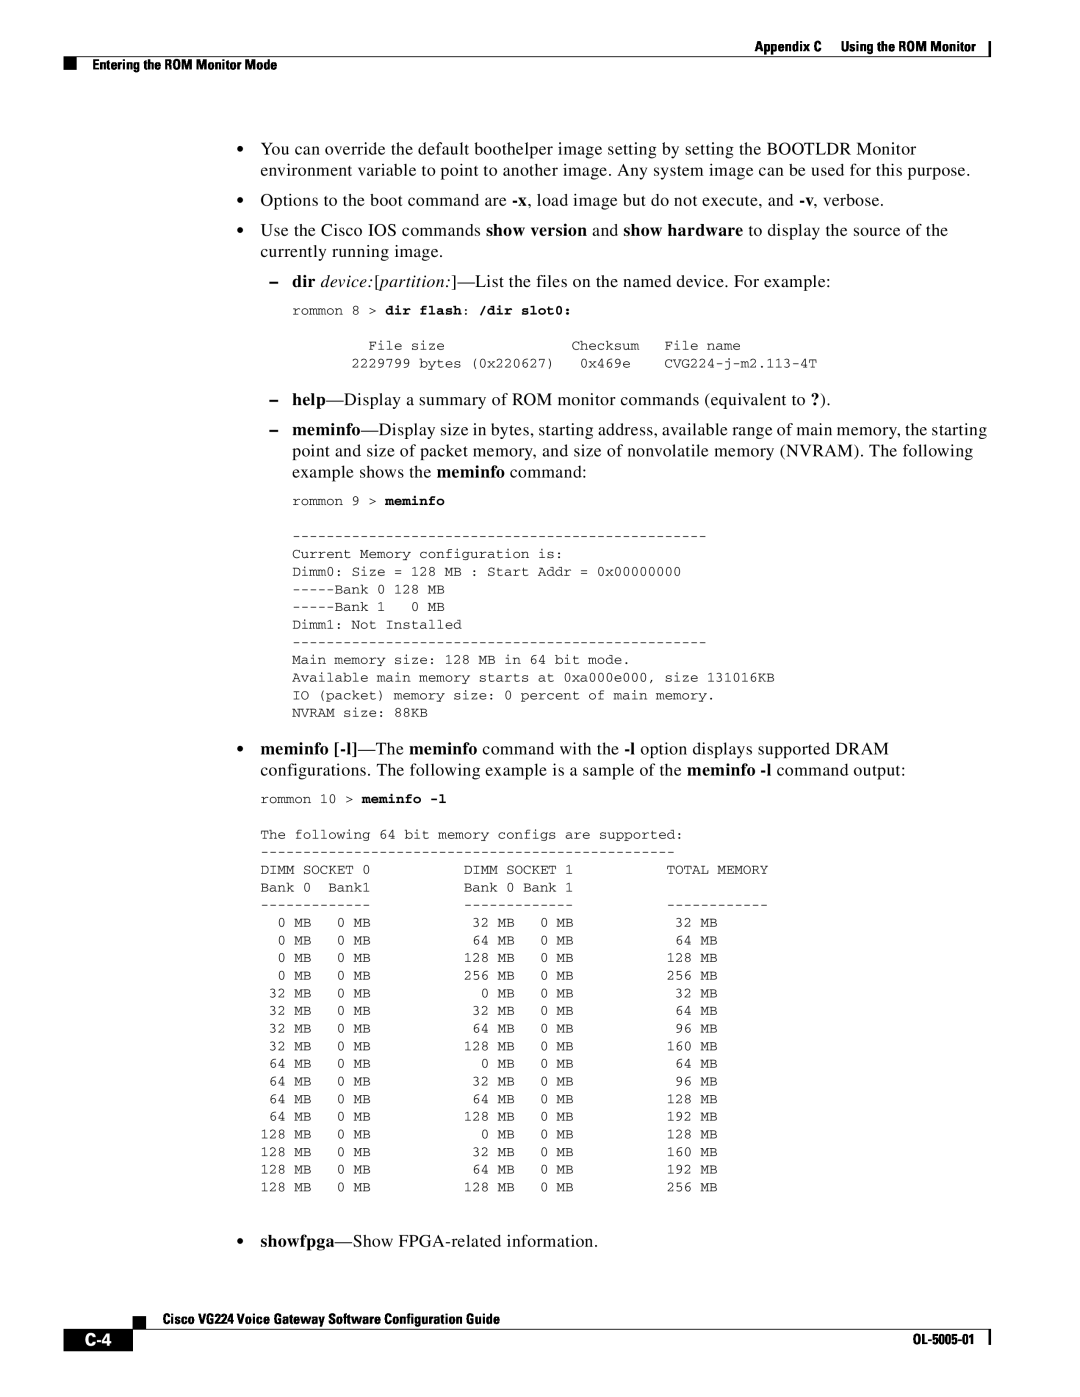 Cisco Systems VG224 manual 